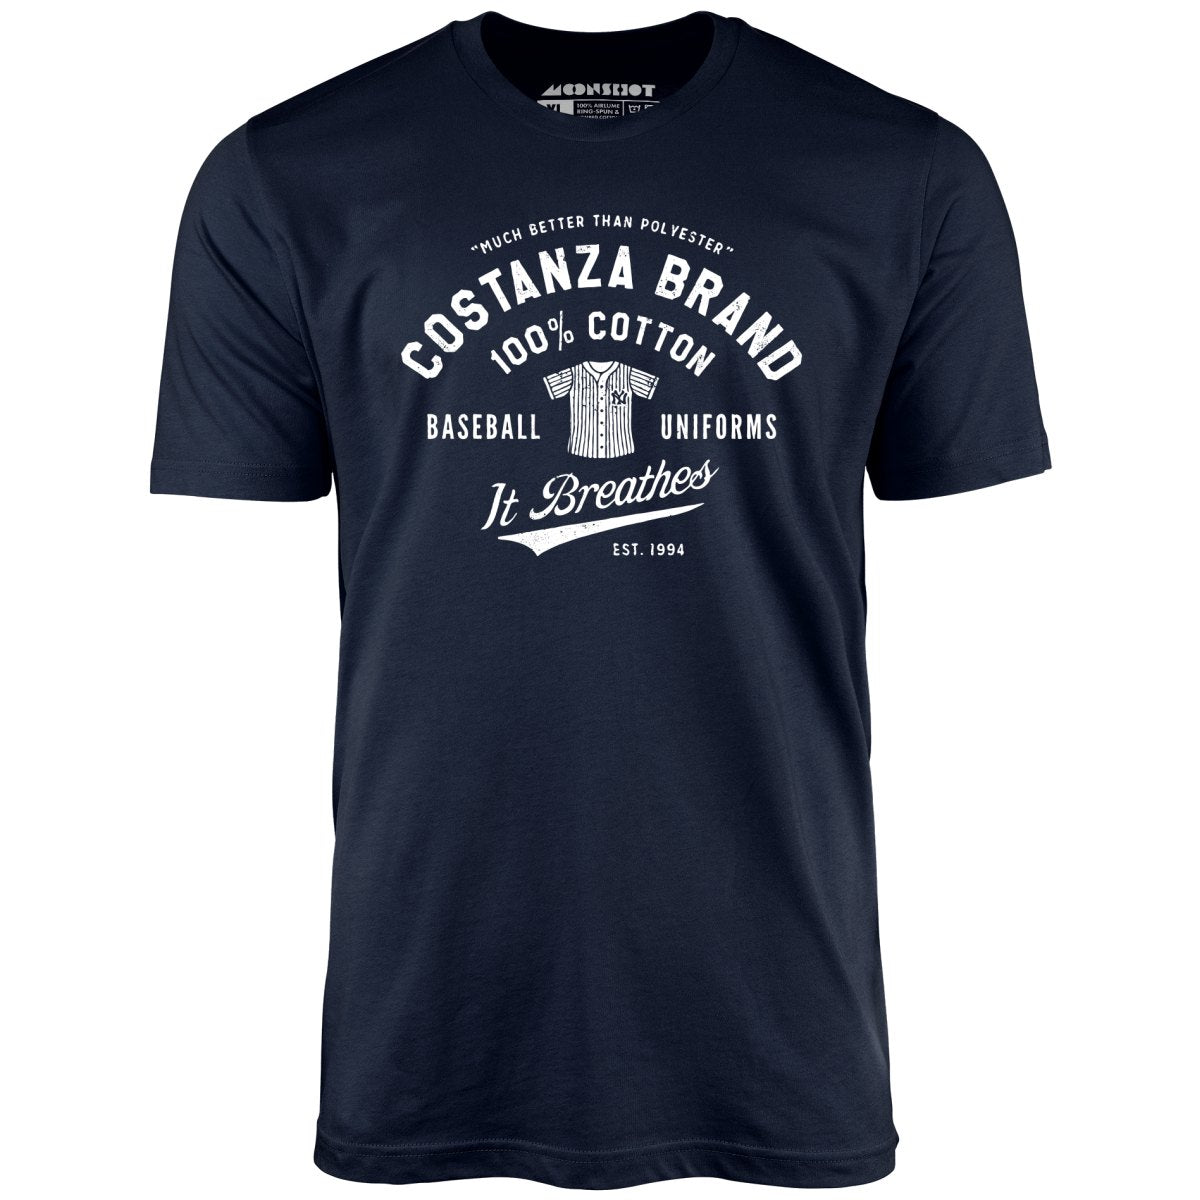 Costanza Brand Cotton Baseball Uniforms - Unisex T-Shirt